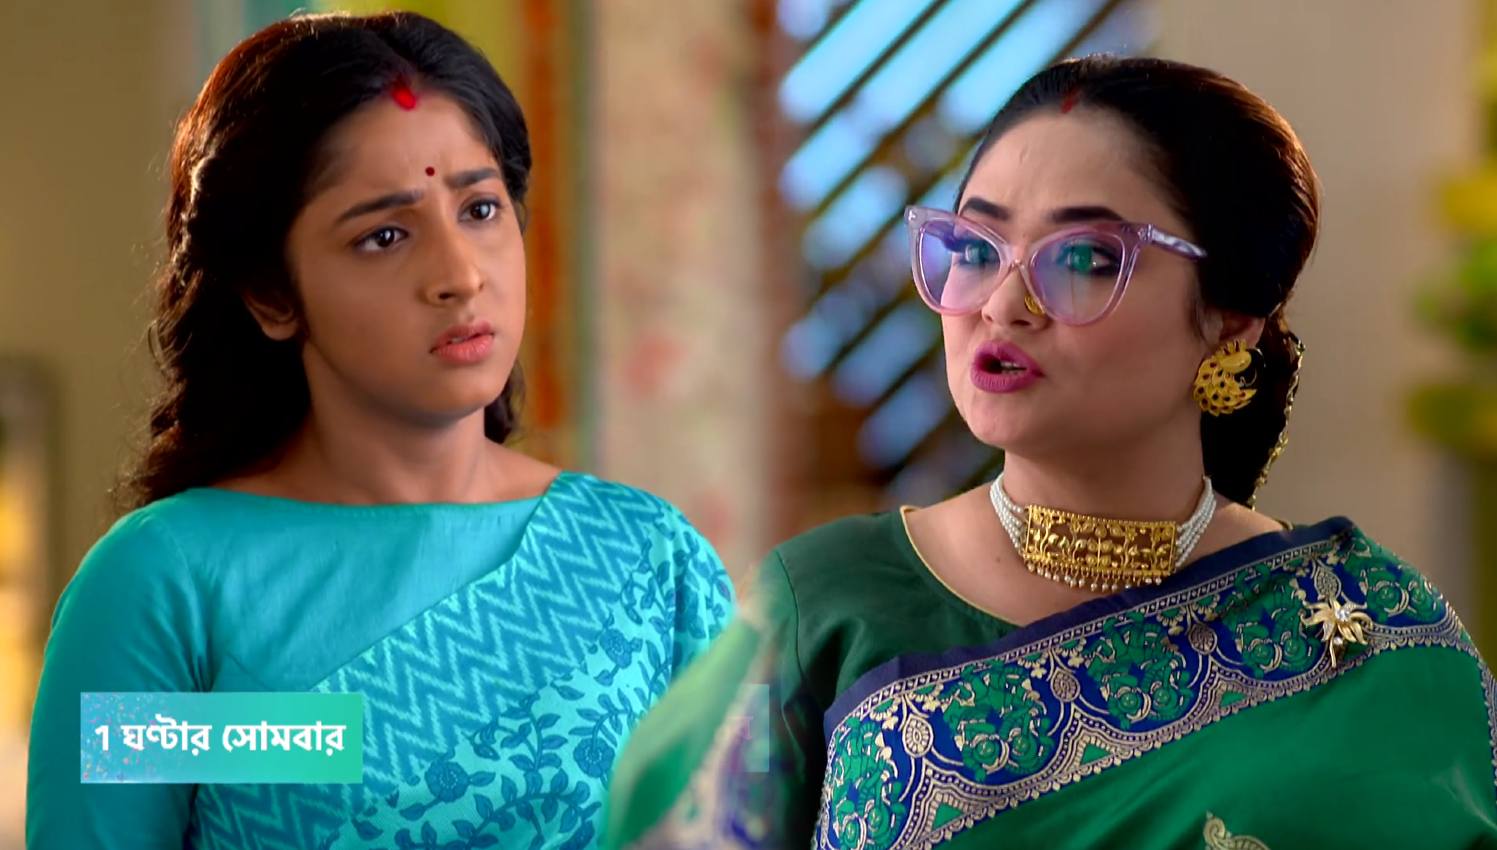 Anurager Chhowa deepa askes labanya sengupta about her other twin baby